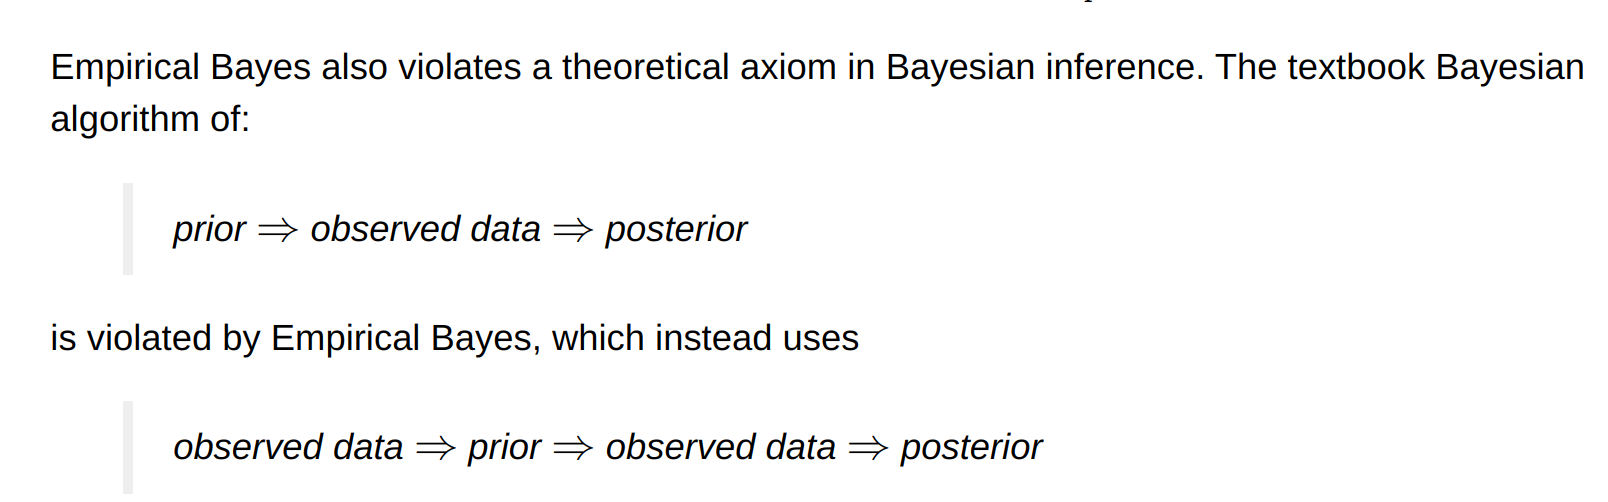 Empirical Bayes violates theoretical axiom